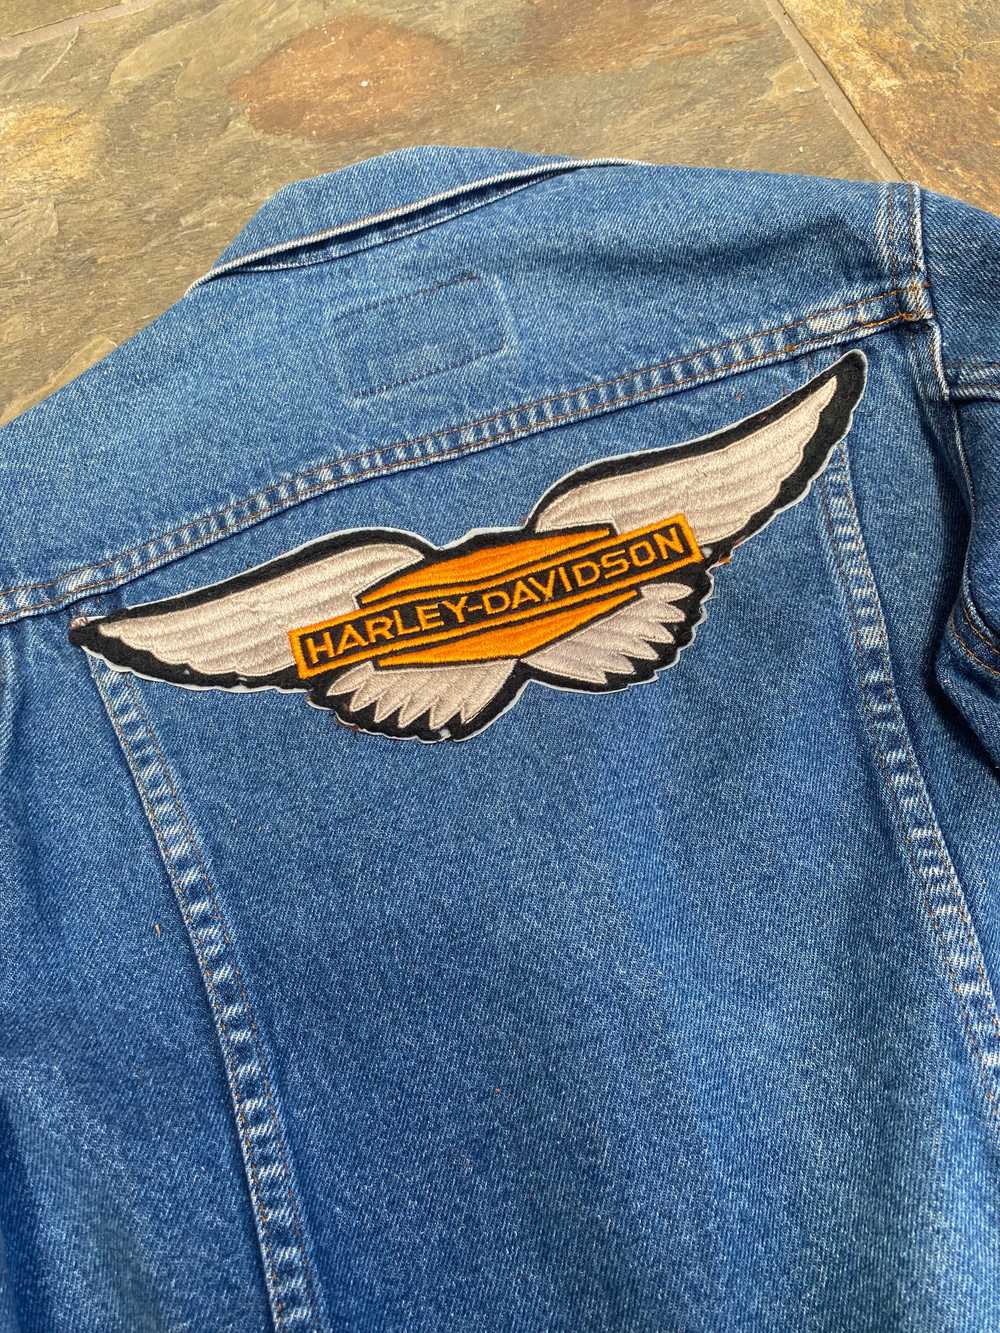 1970s Harley Davidson Roebucks Denim Jacket - image 10